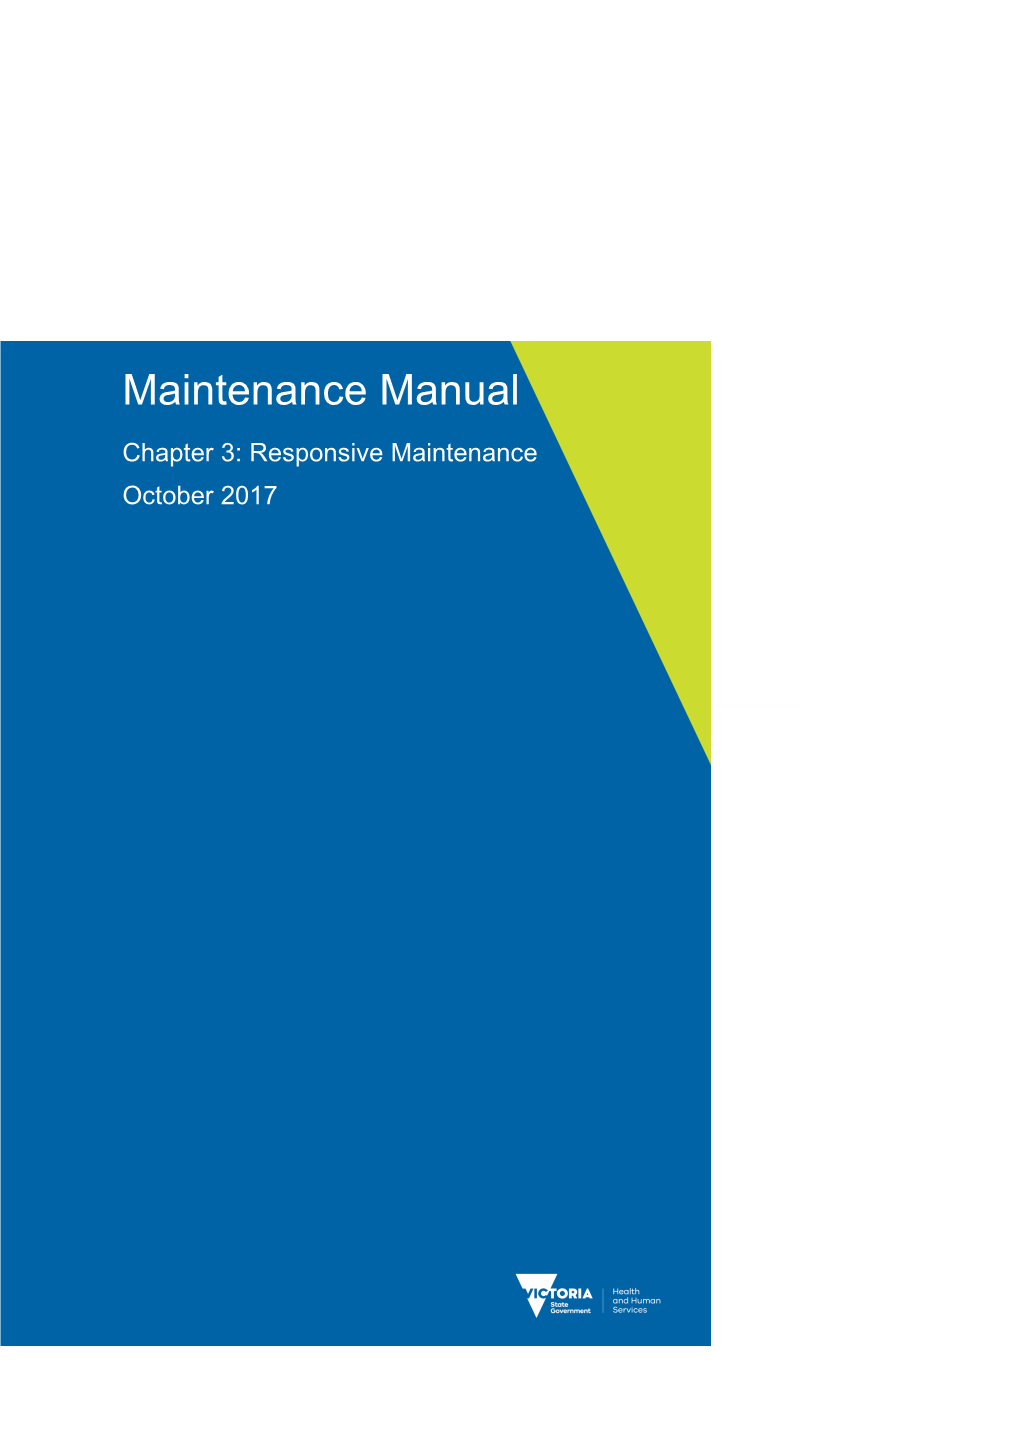 Maintenance Manual Chapter 3: Responisve Maintenance October 2017